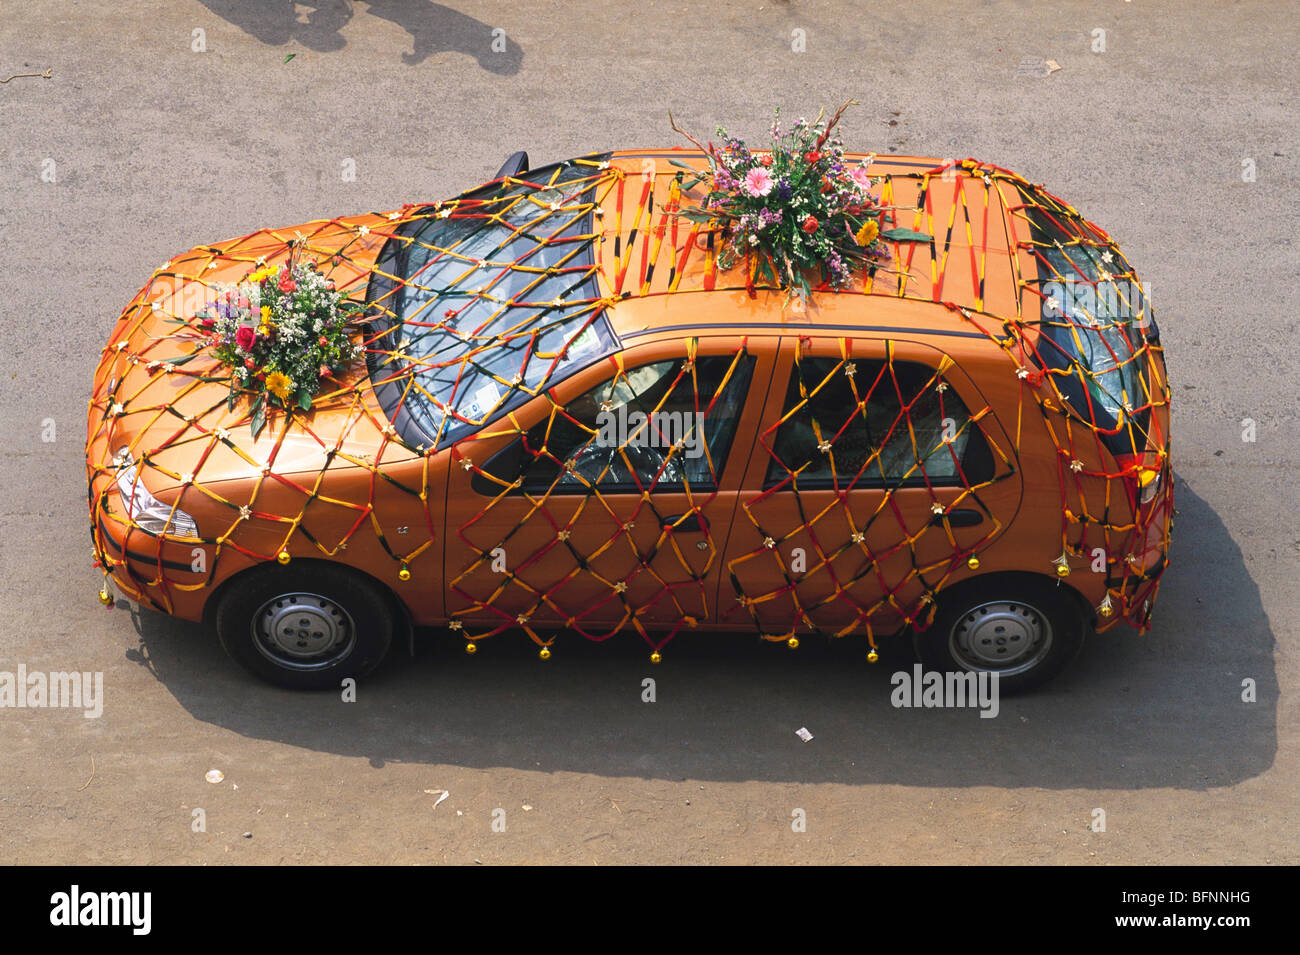 Awesome Wedding Car Decoration Ideas trending in 2k19! | by EventWedo |  Medium